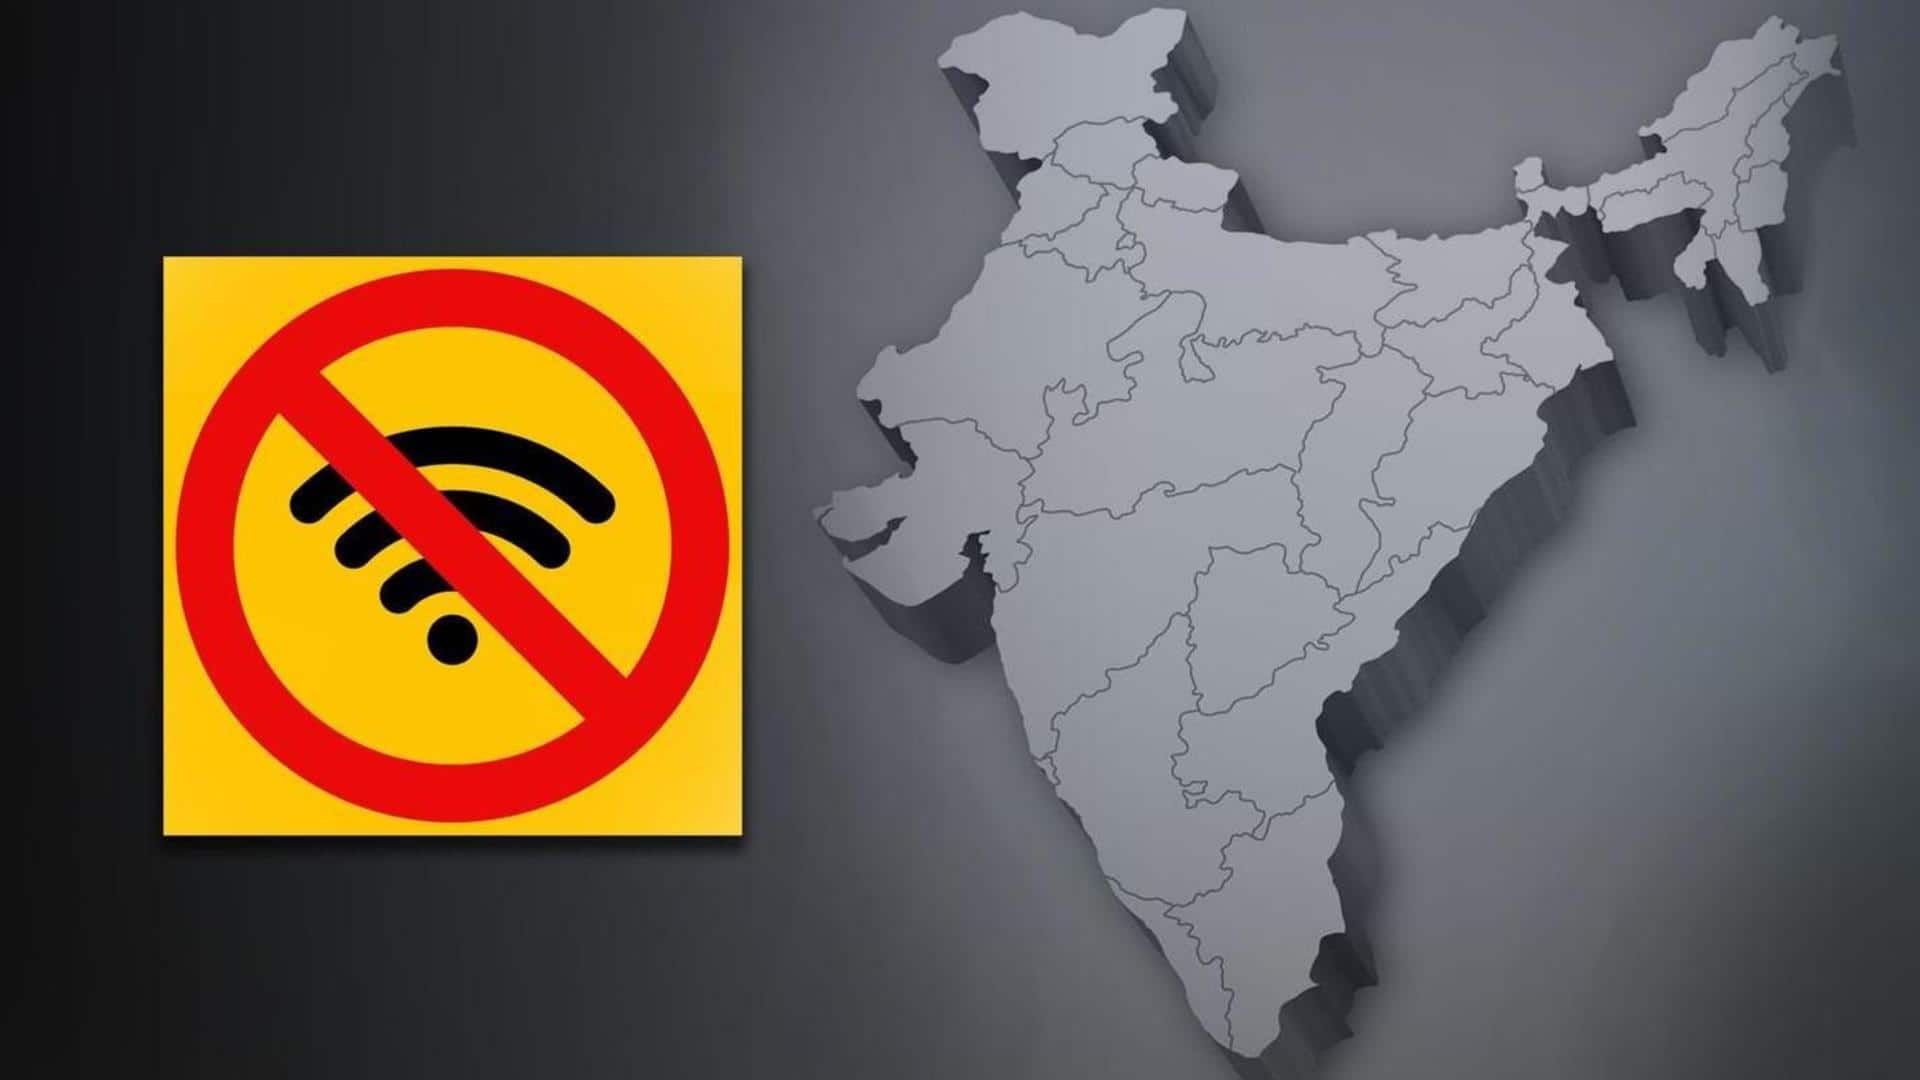 India tops internet shutdown list for 5th straight year